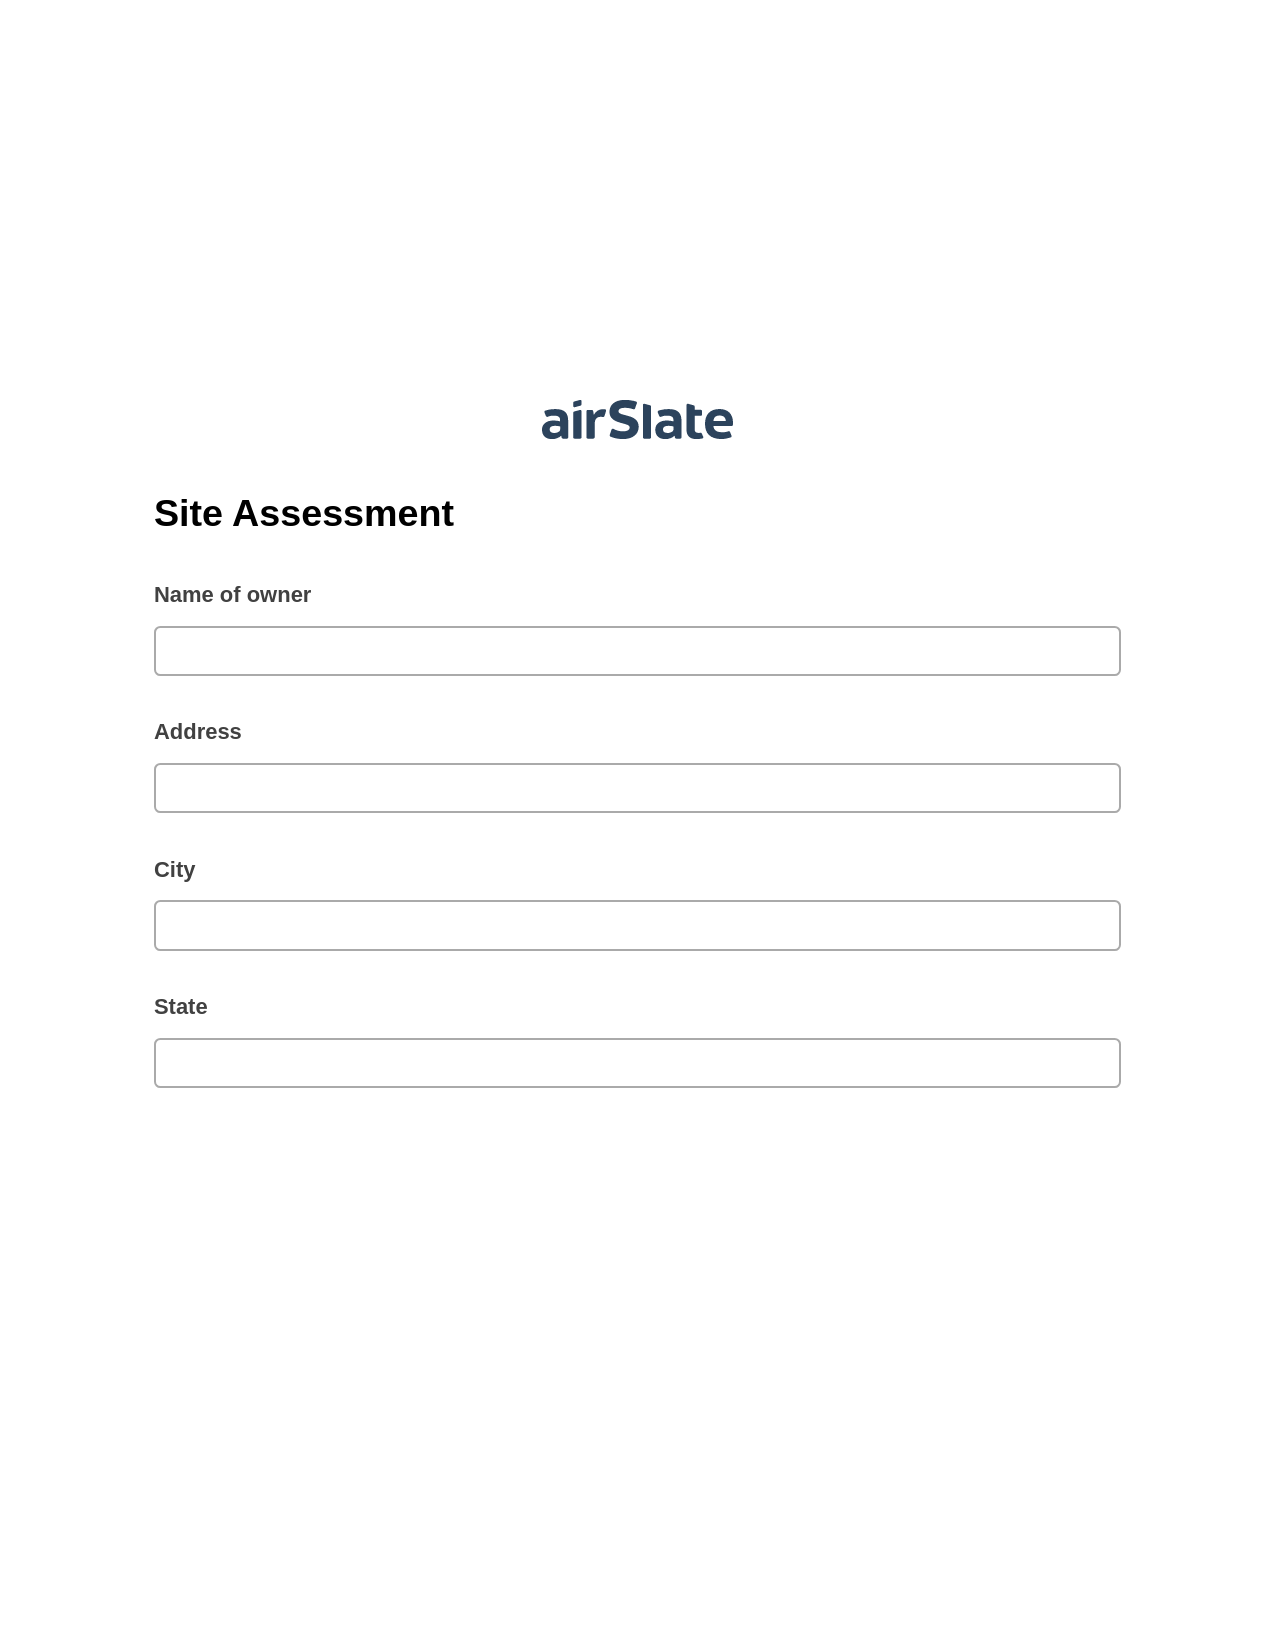 Multirole Site Assessment Pre-fill from CSV File Bot, Google Calendar Bot, Export to Google Sheet Bot